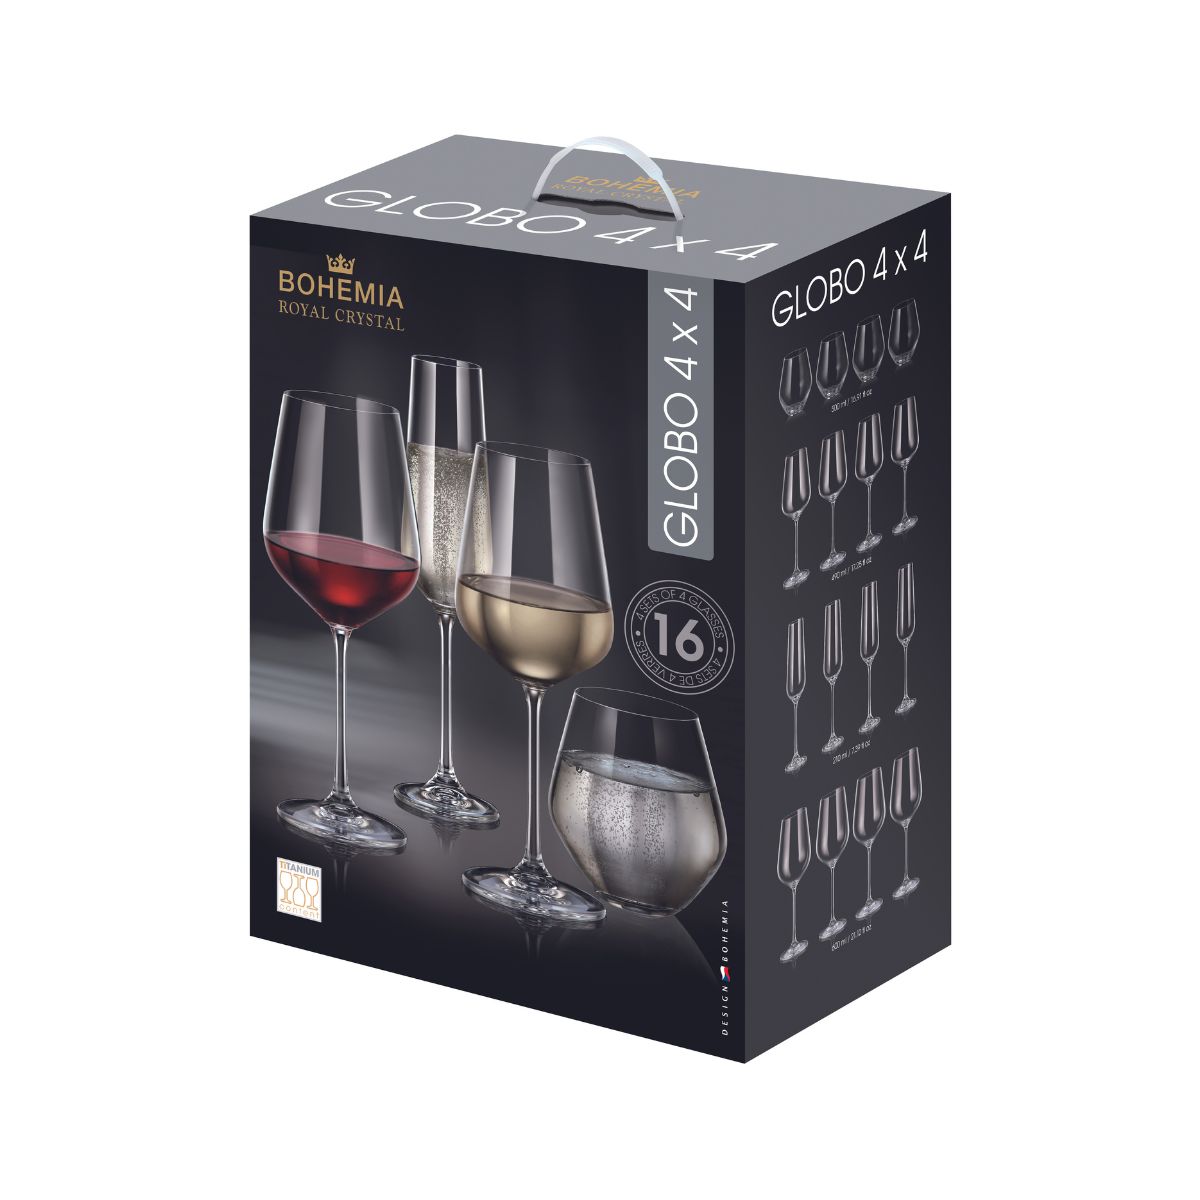 Bucatarie - Set de 16 pahare pentru vin rosu, vin alb, sampanie si apa, transparent, din cristal de Bohemia, 500/490/210/600 ml, Globo, hectarul.ro